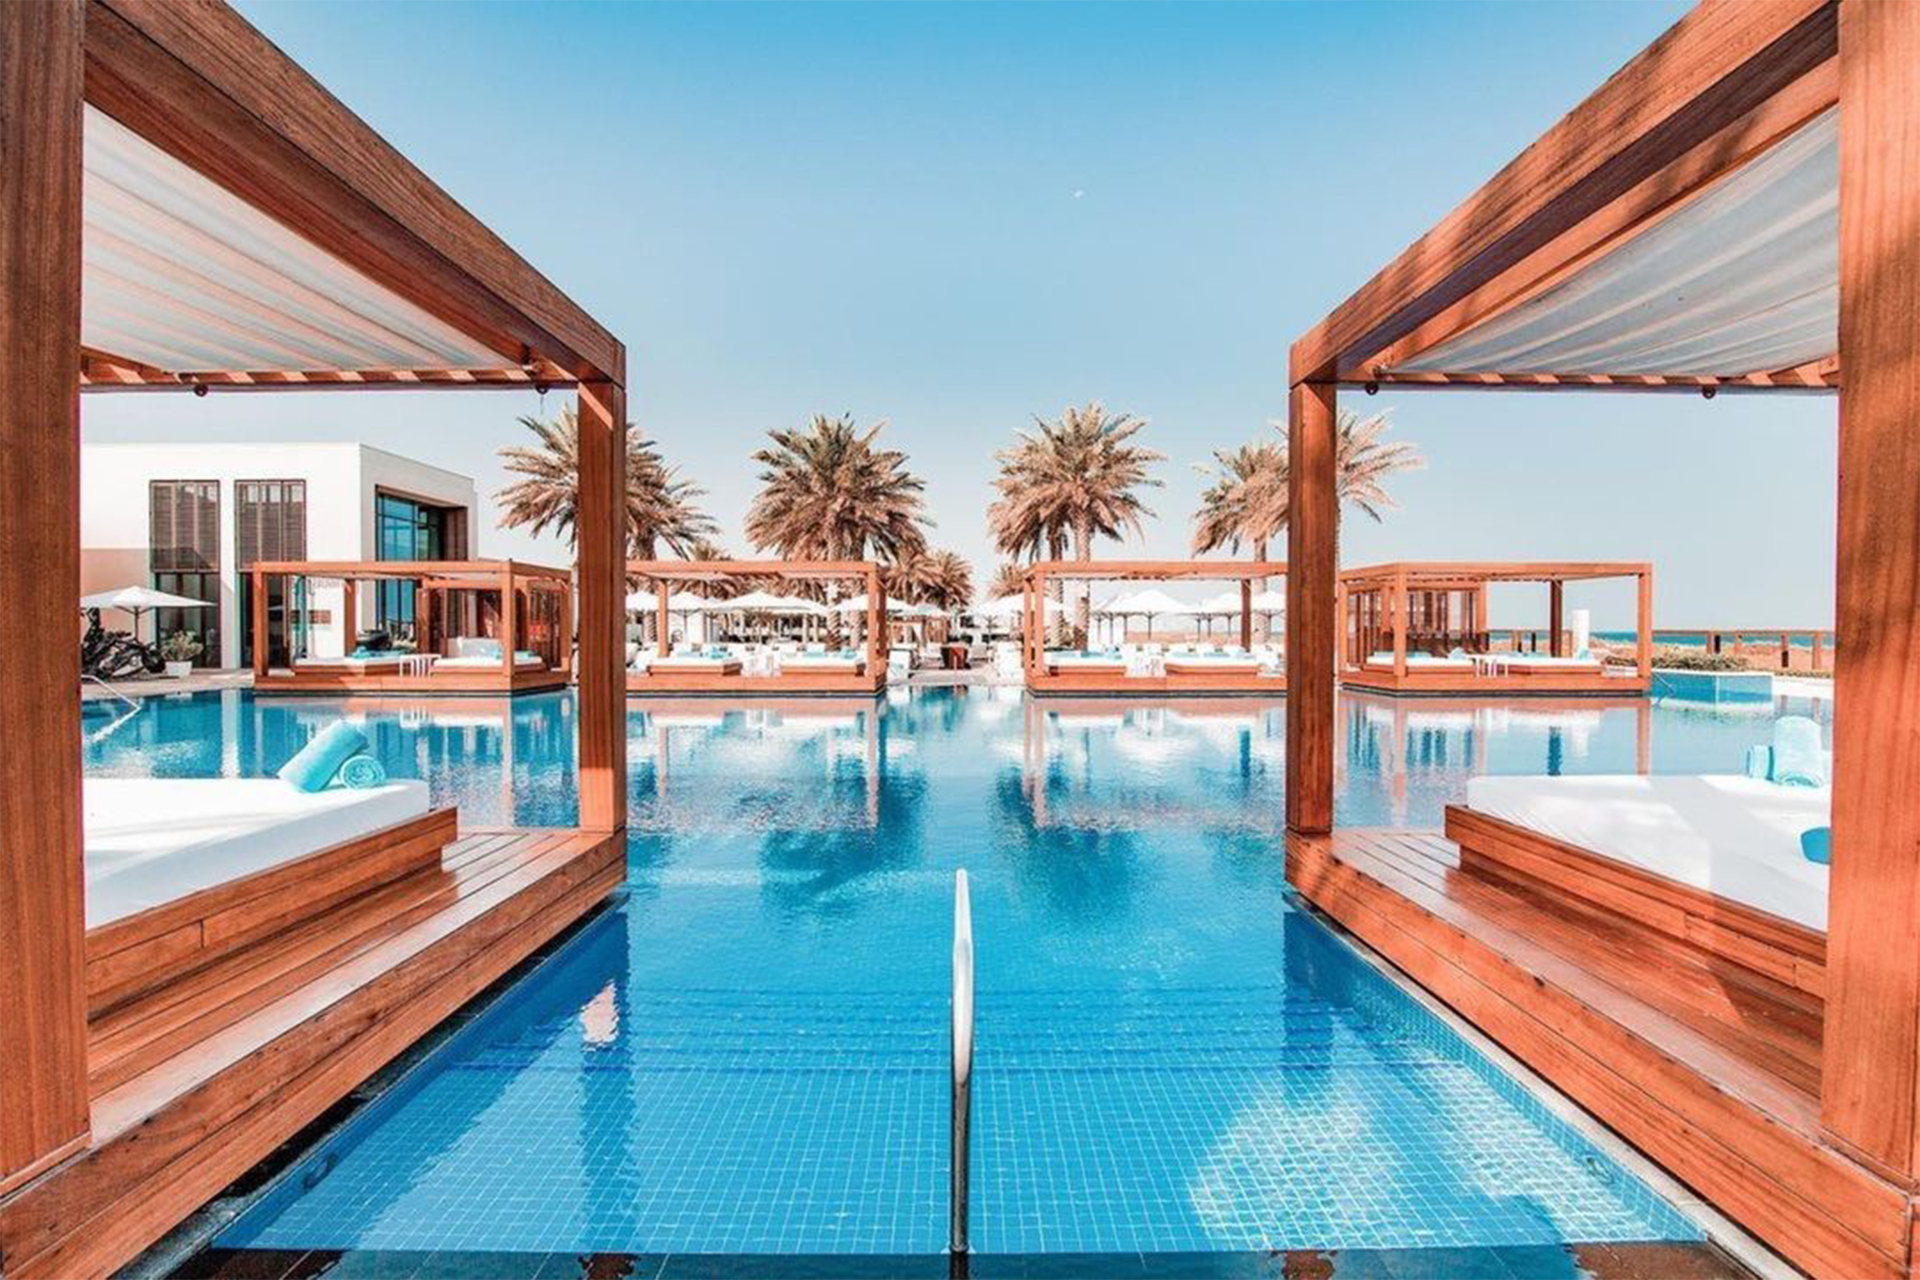 Abu Dhabi's 5 Best Beach Clubs - GQ Middle East